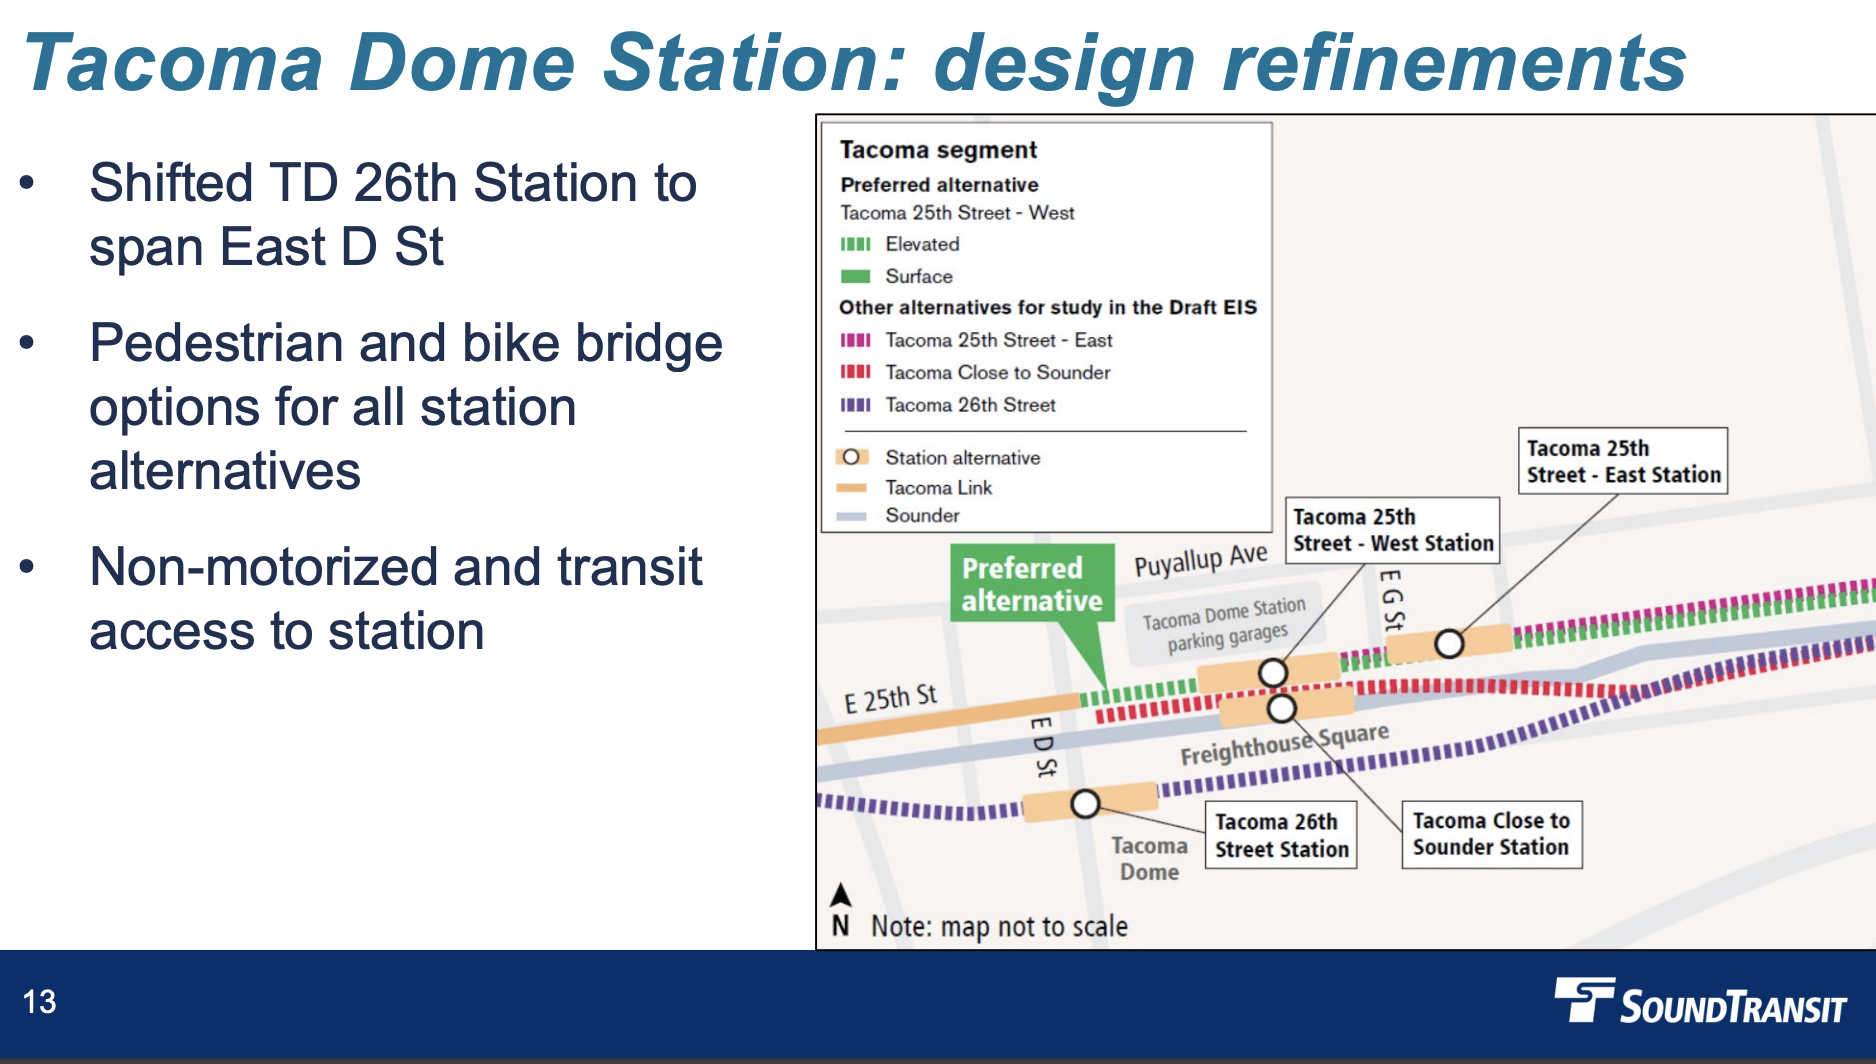 Tacoma Dome Station design refinements. (Sound Transit)